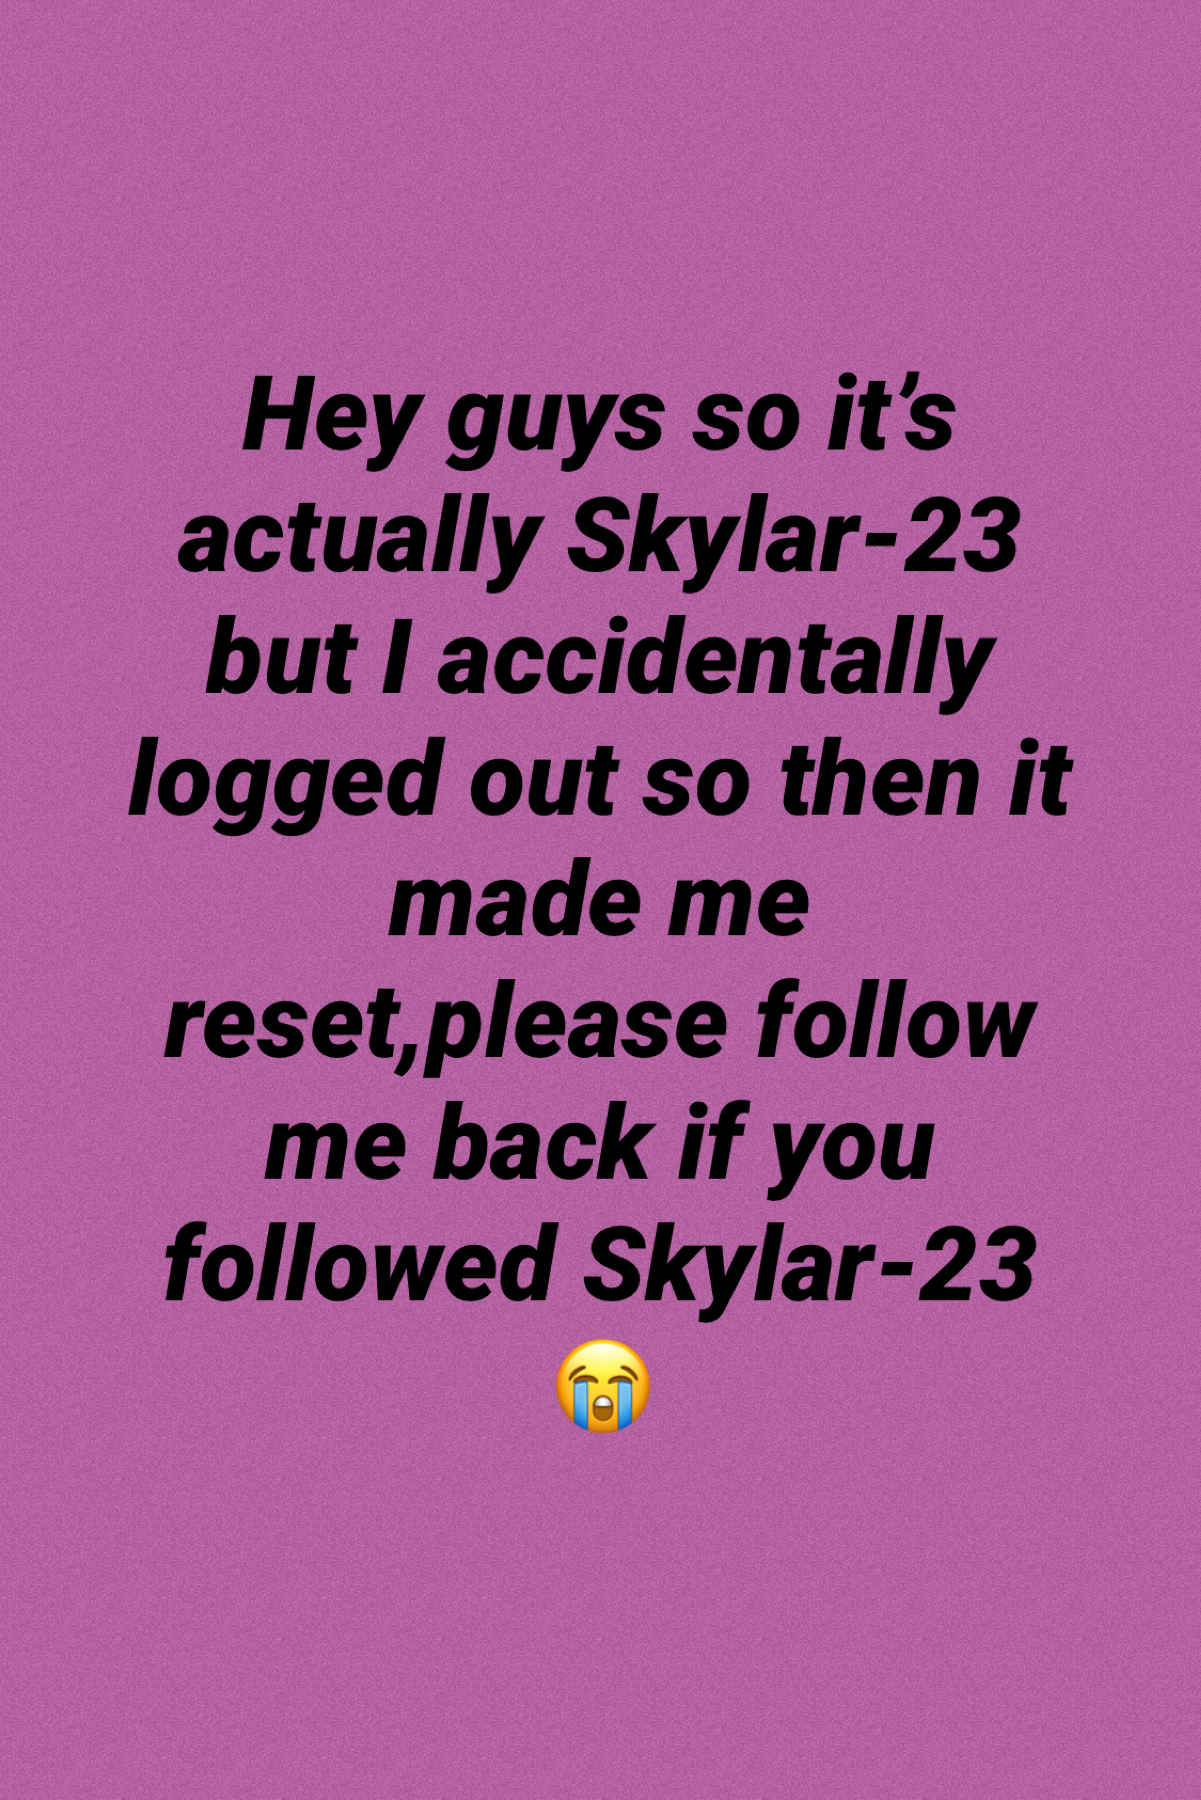 Tap ergent 

Please please please follow Skylar-24 bc it’s actually Skylar-23 
